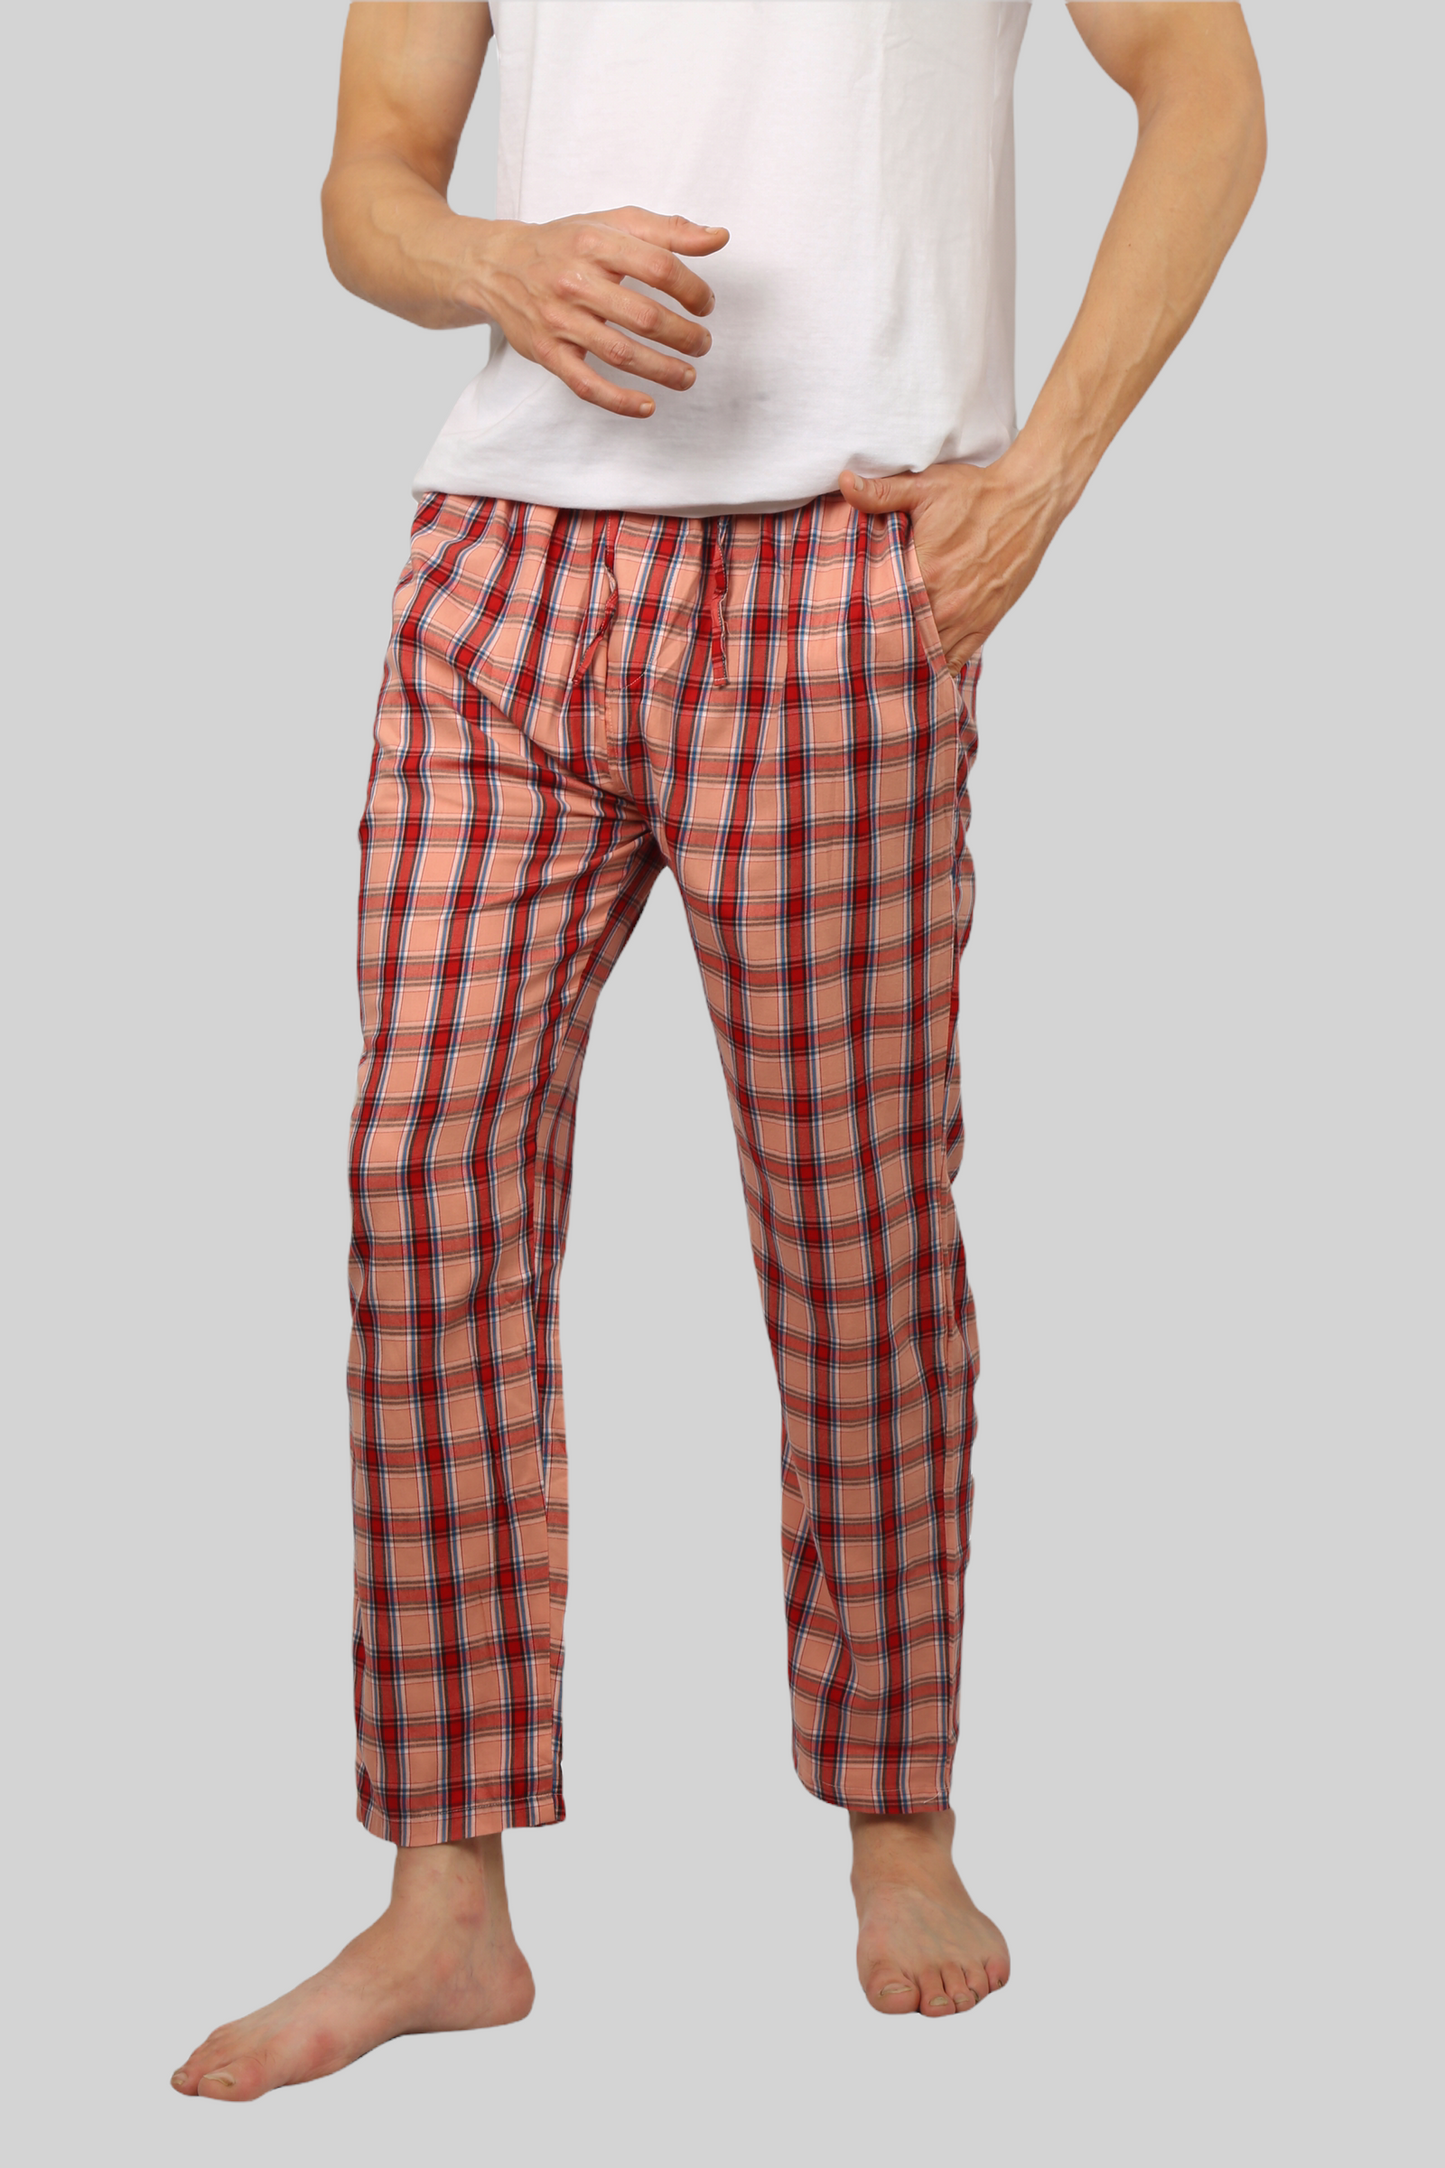 Reddish Cream soft and super comfortable checkered pajamas for men